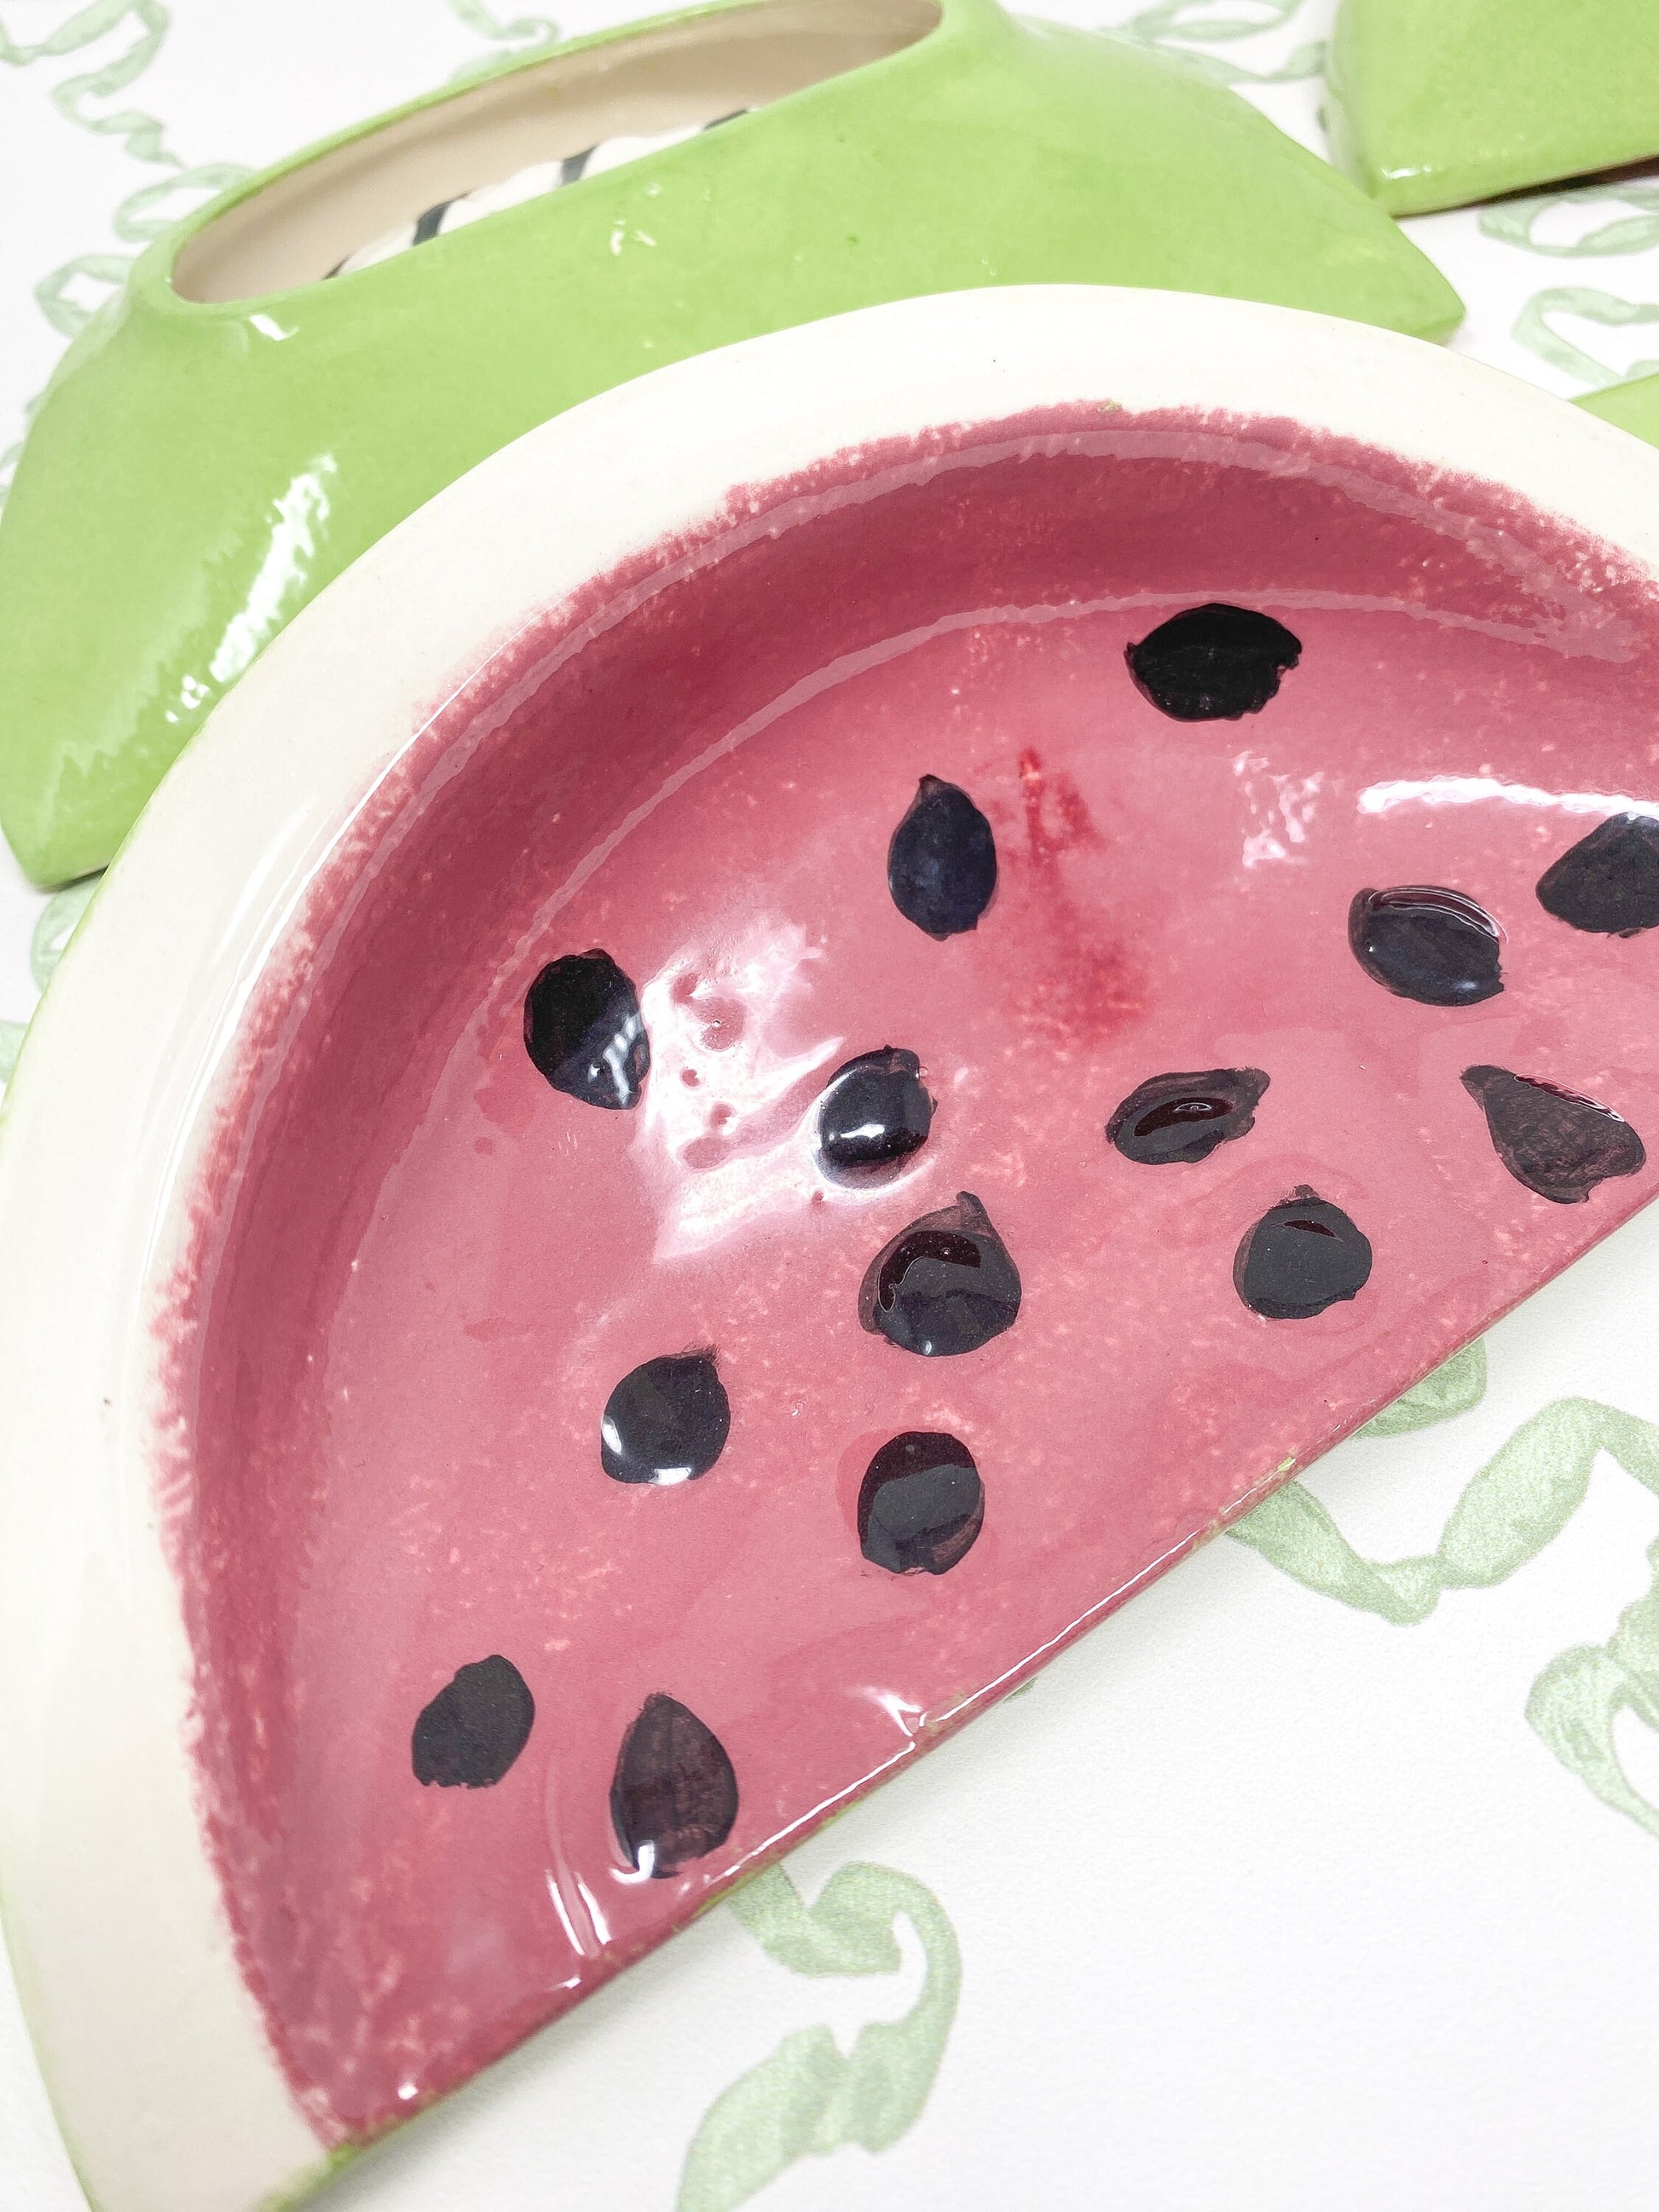 Vintage Handpainted Watermelon Plates